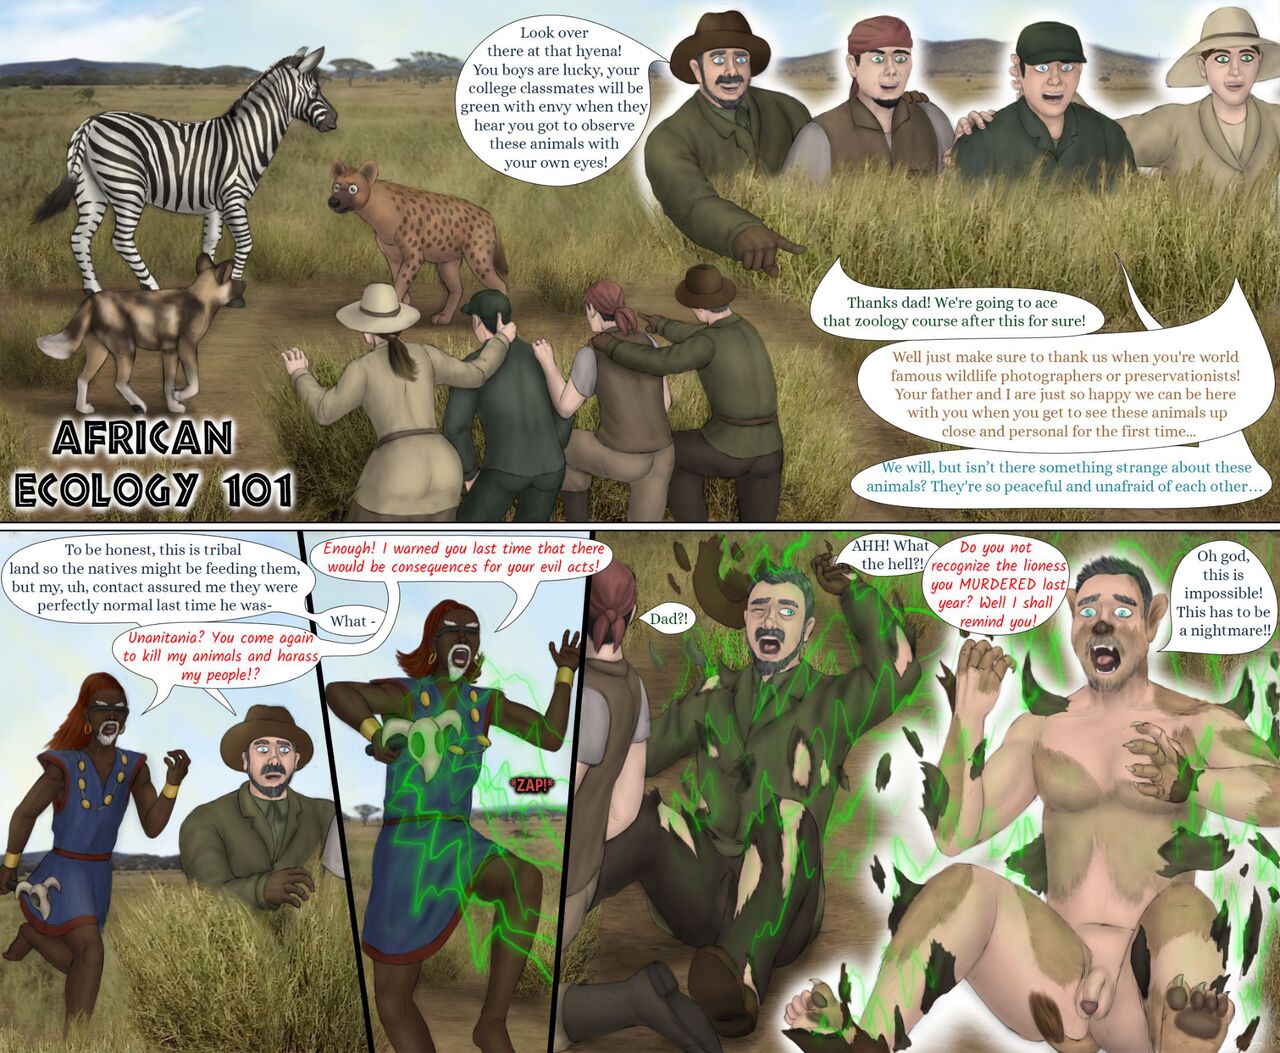 African Hentai Porn - African Ecology 101 HD Hentai Porn Comic - 001